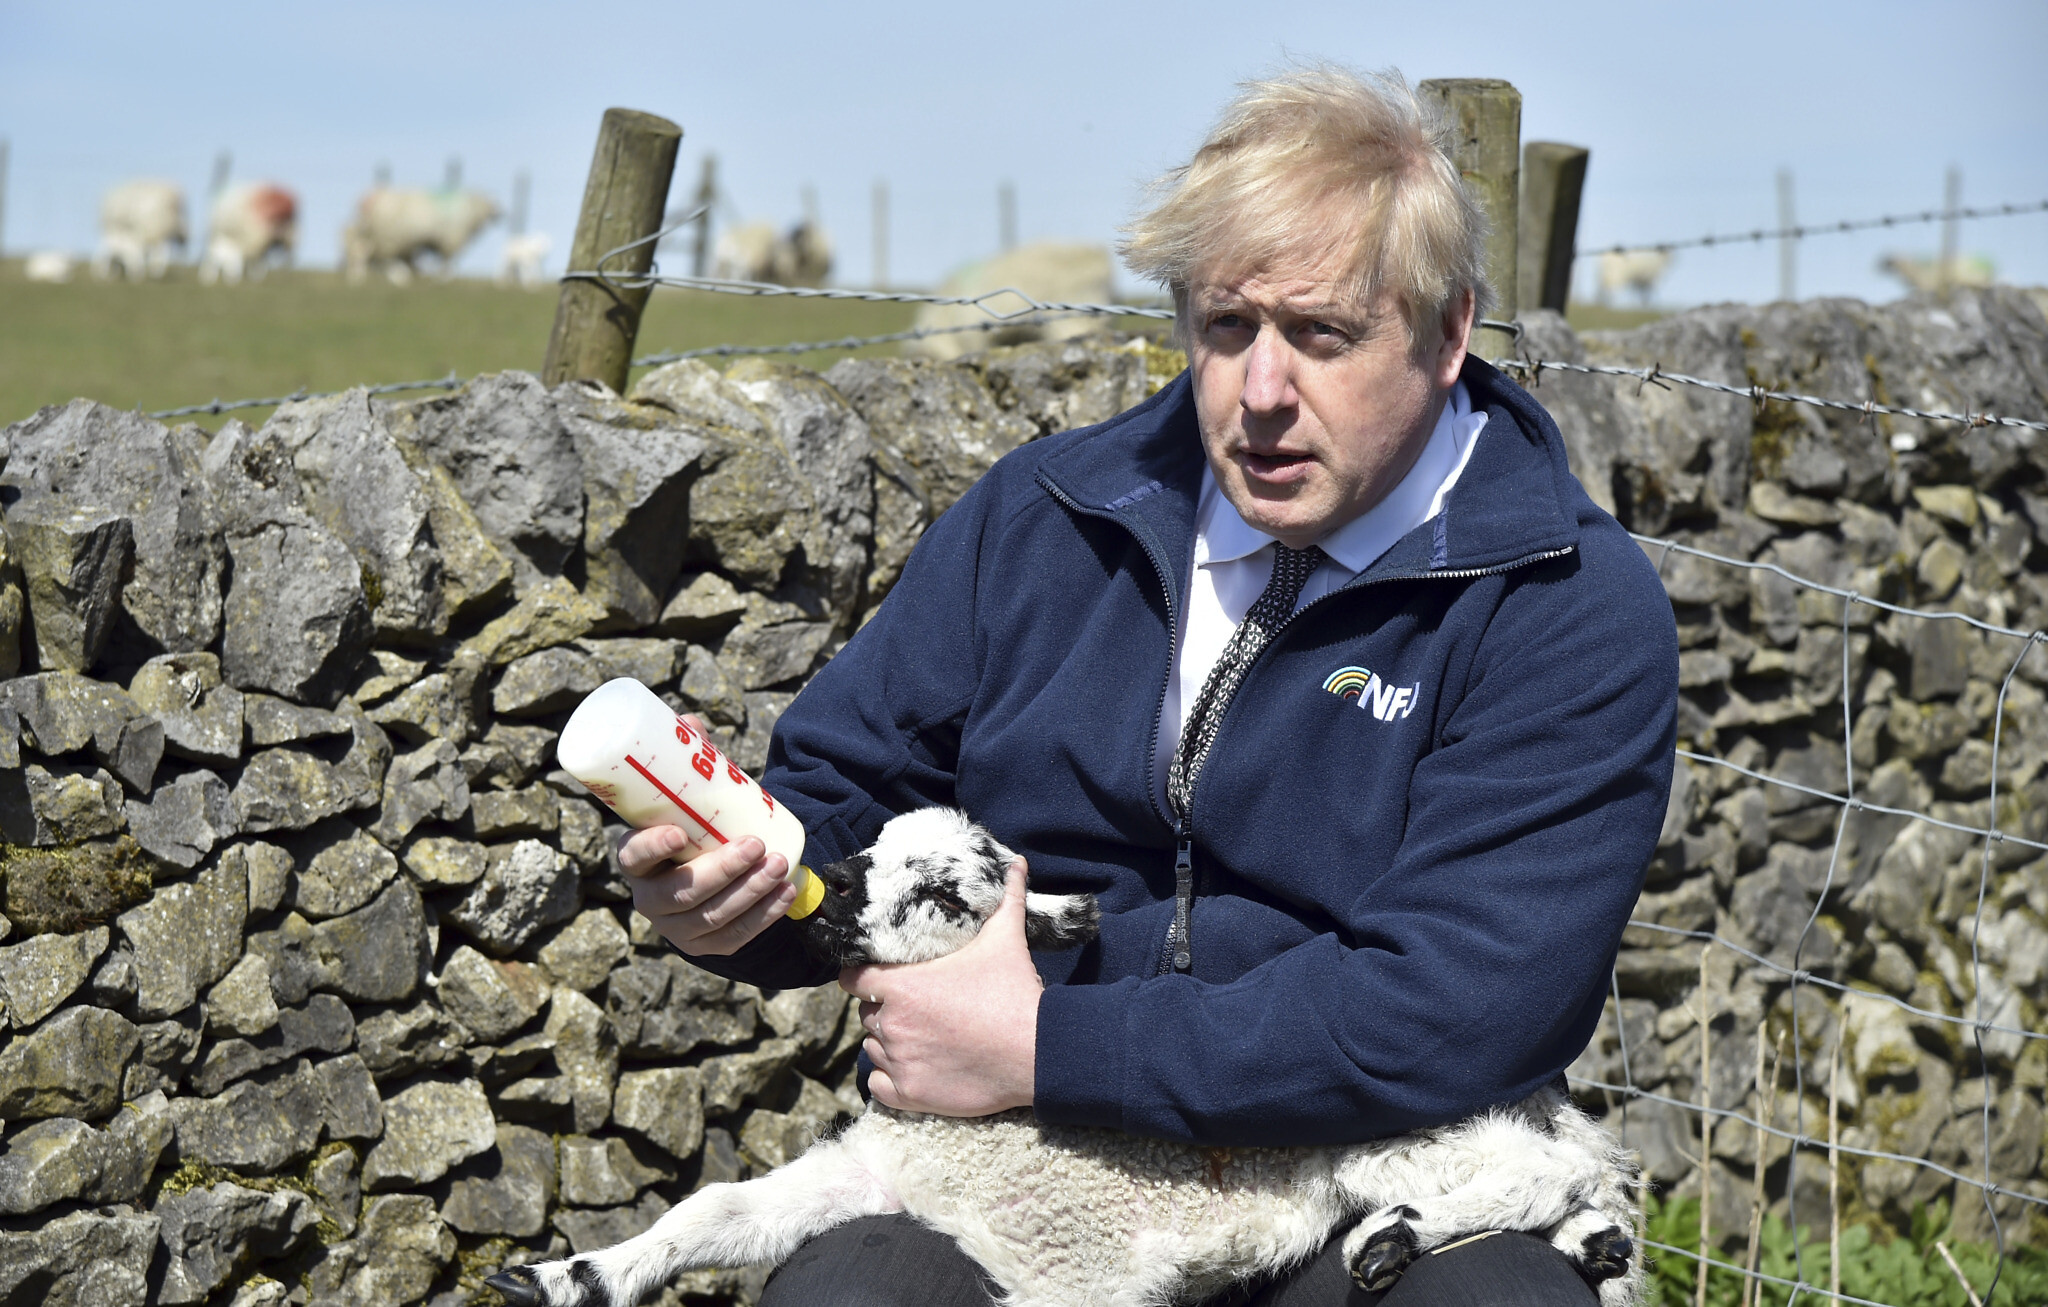 UK: Boris Johnson paid for London flat renovation, minister insists